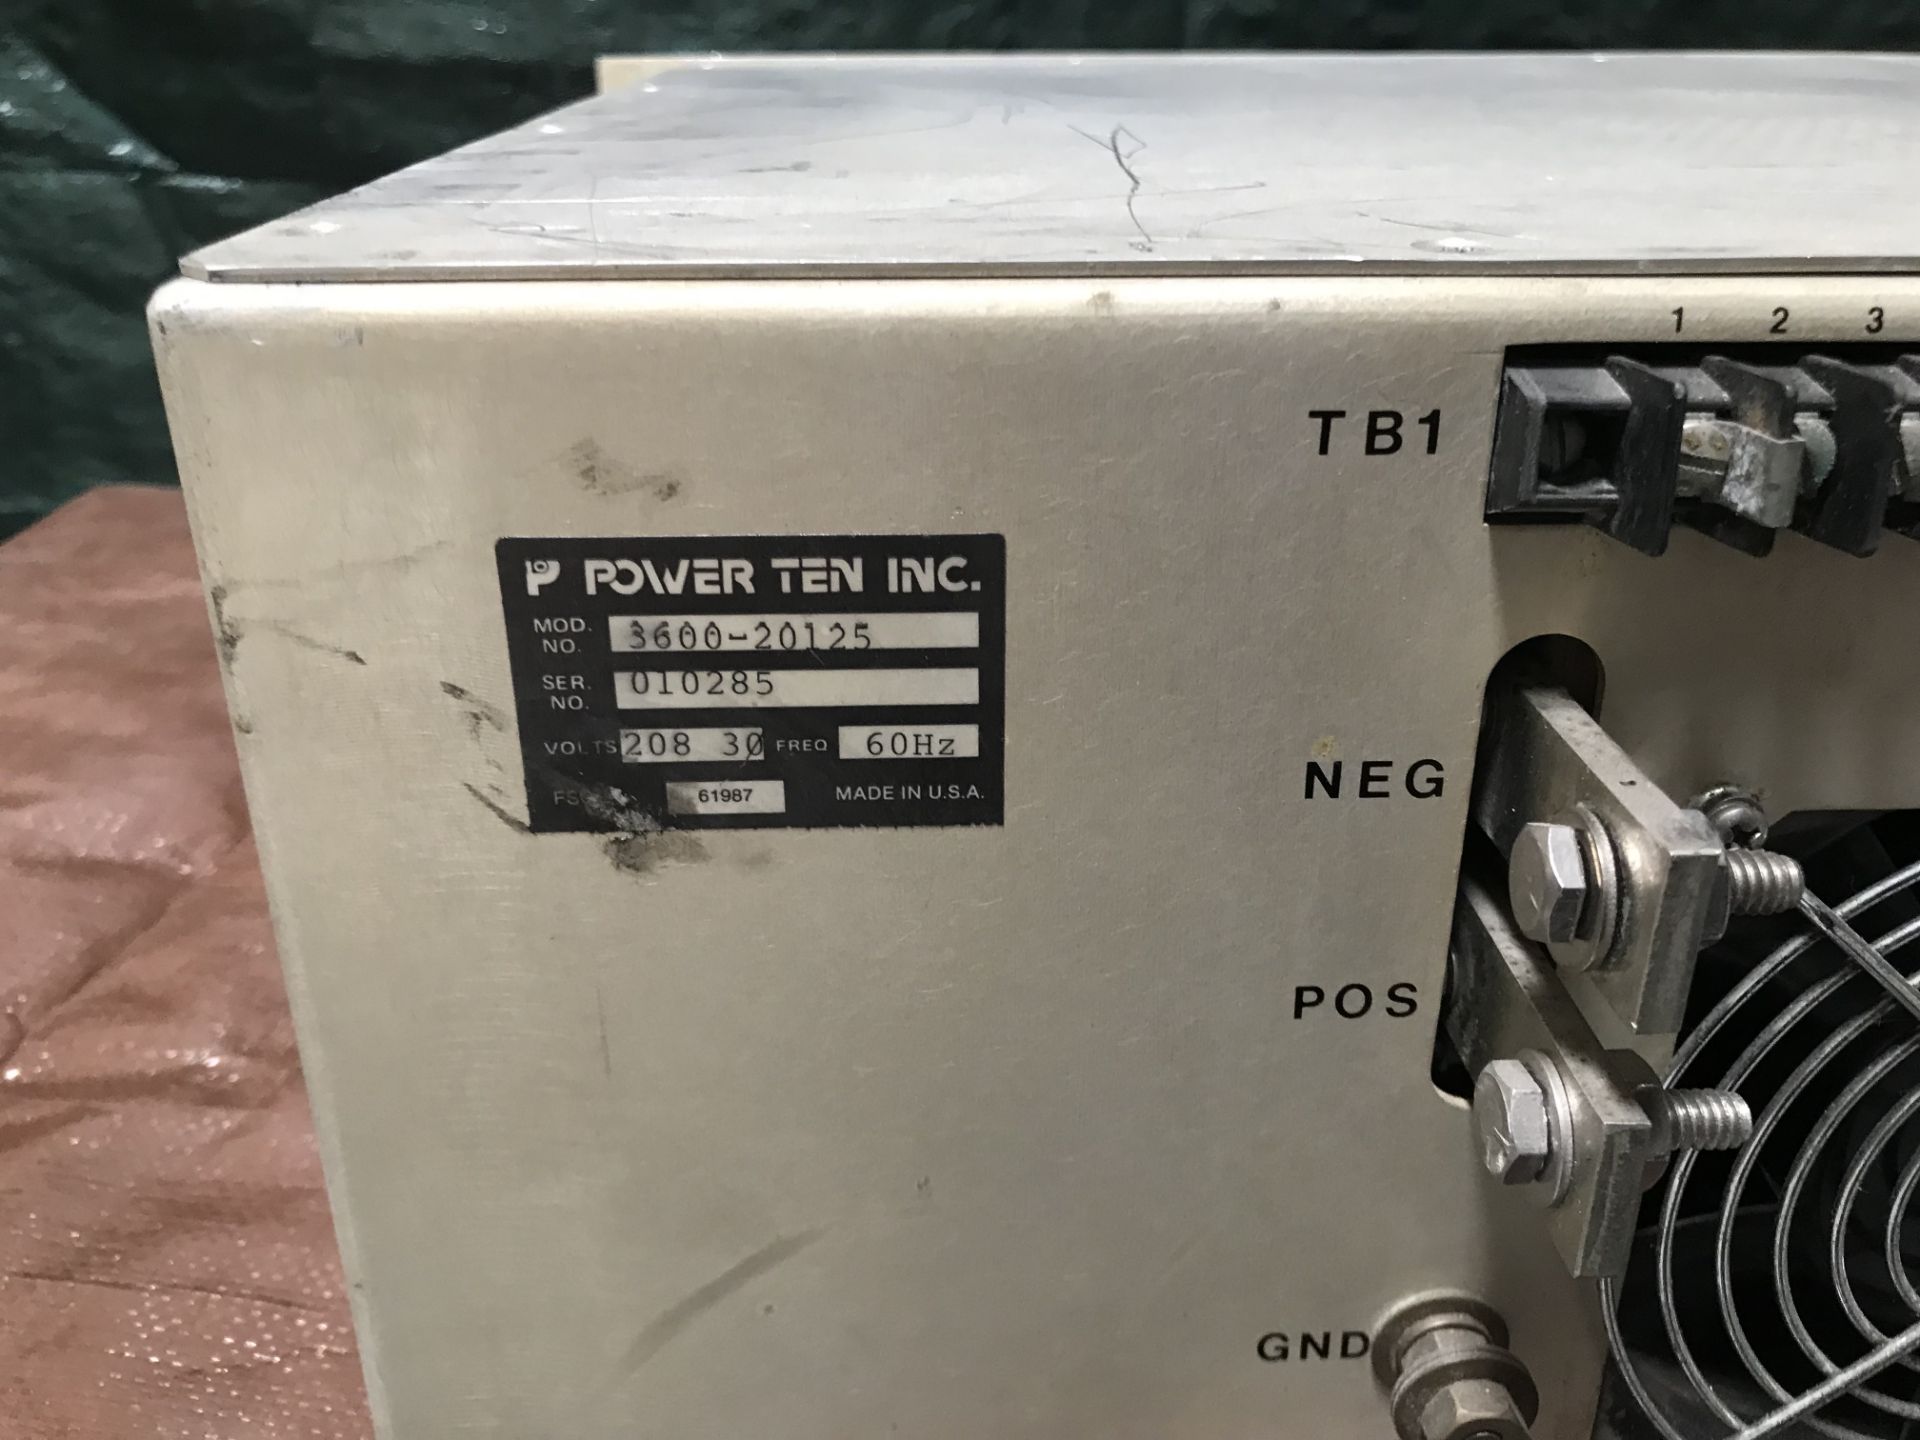 #079 Power Ten Inc. Model: 3600-20125, SN: 010285, Input: 208VAC 3Phase 60Hz, Output: 0-20VDC/125Amp - Image 8 of 9